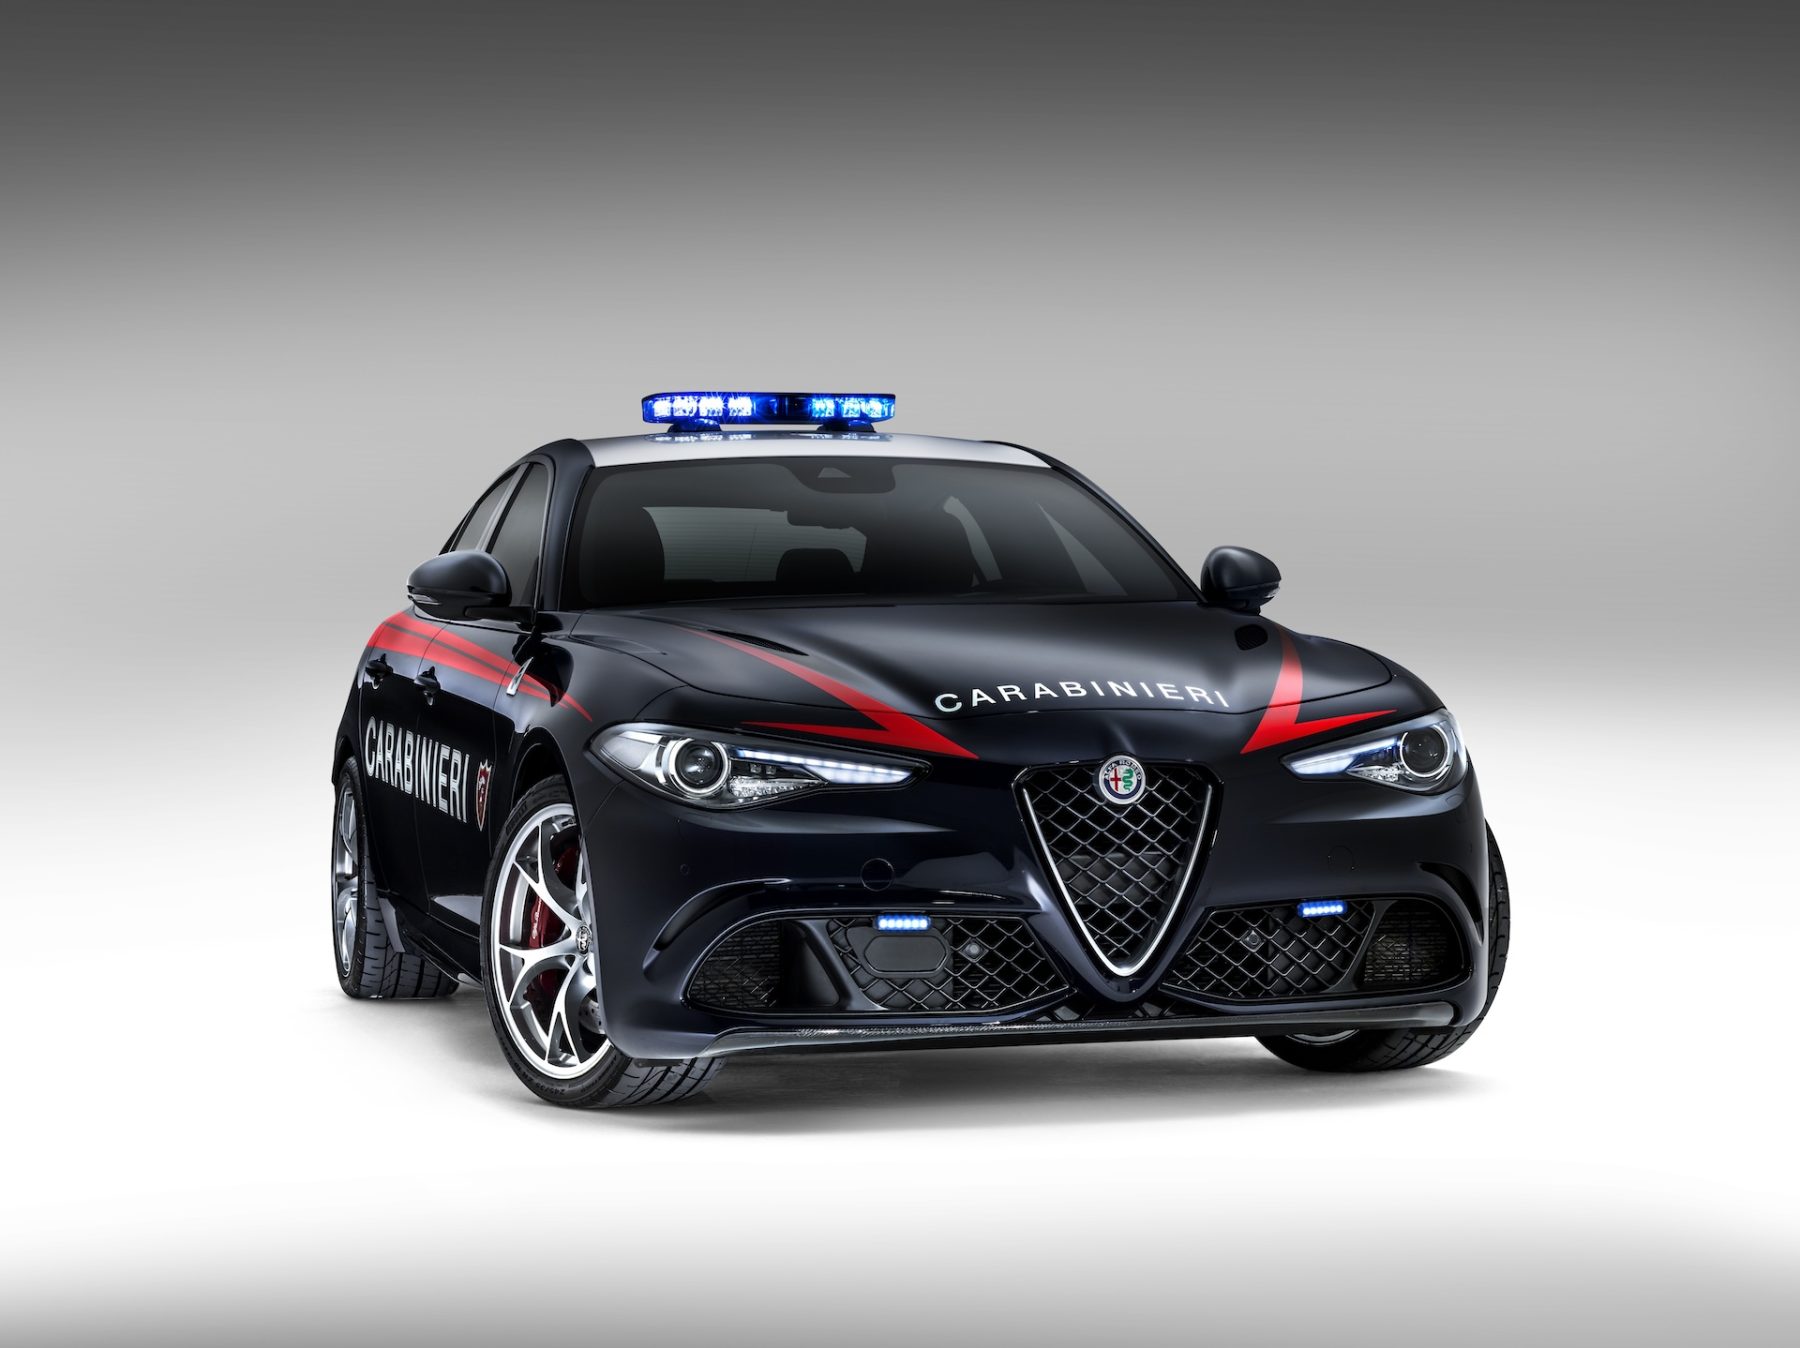 Alfa-Romeo_Giulia-Carabinieri_archiefbeeld